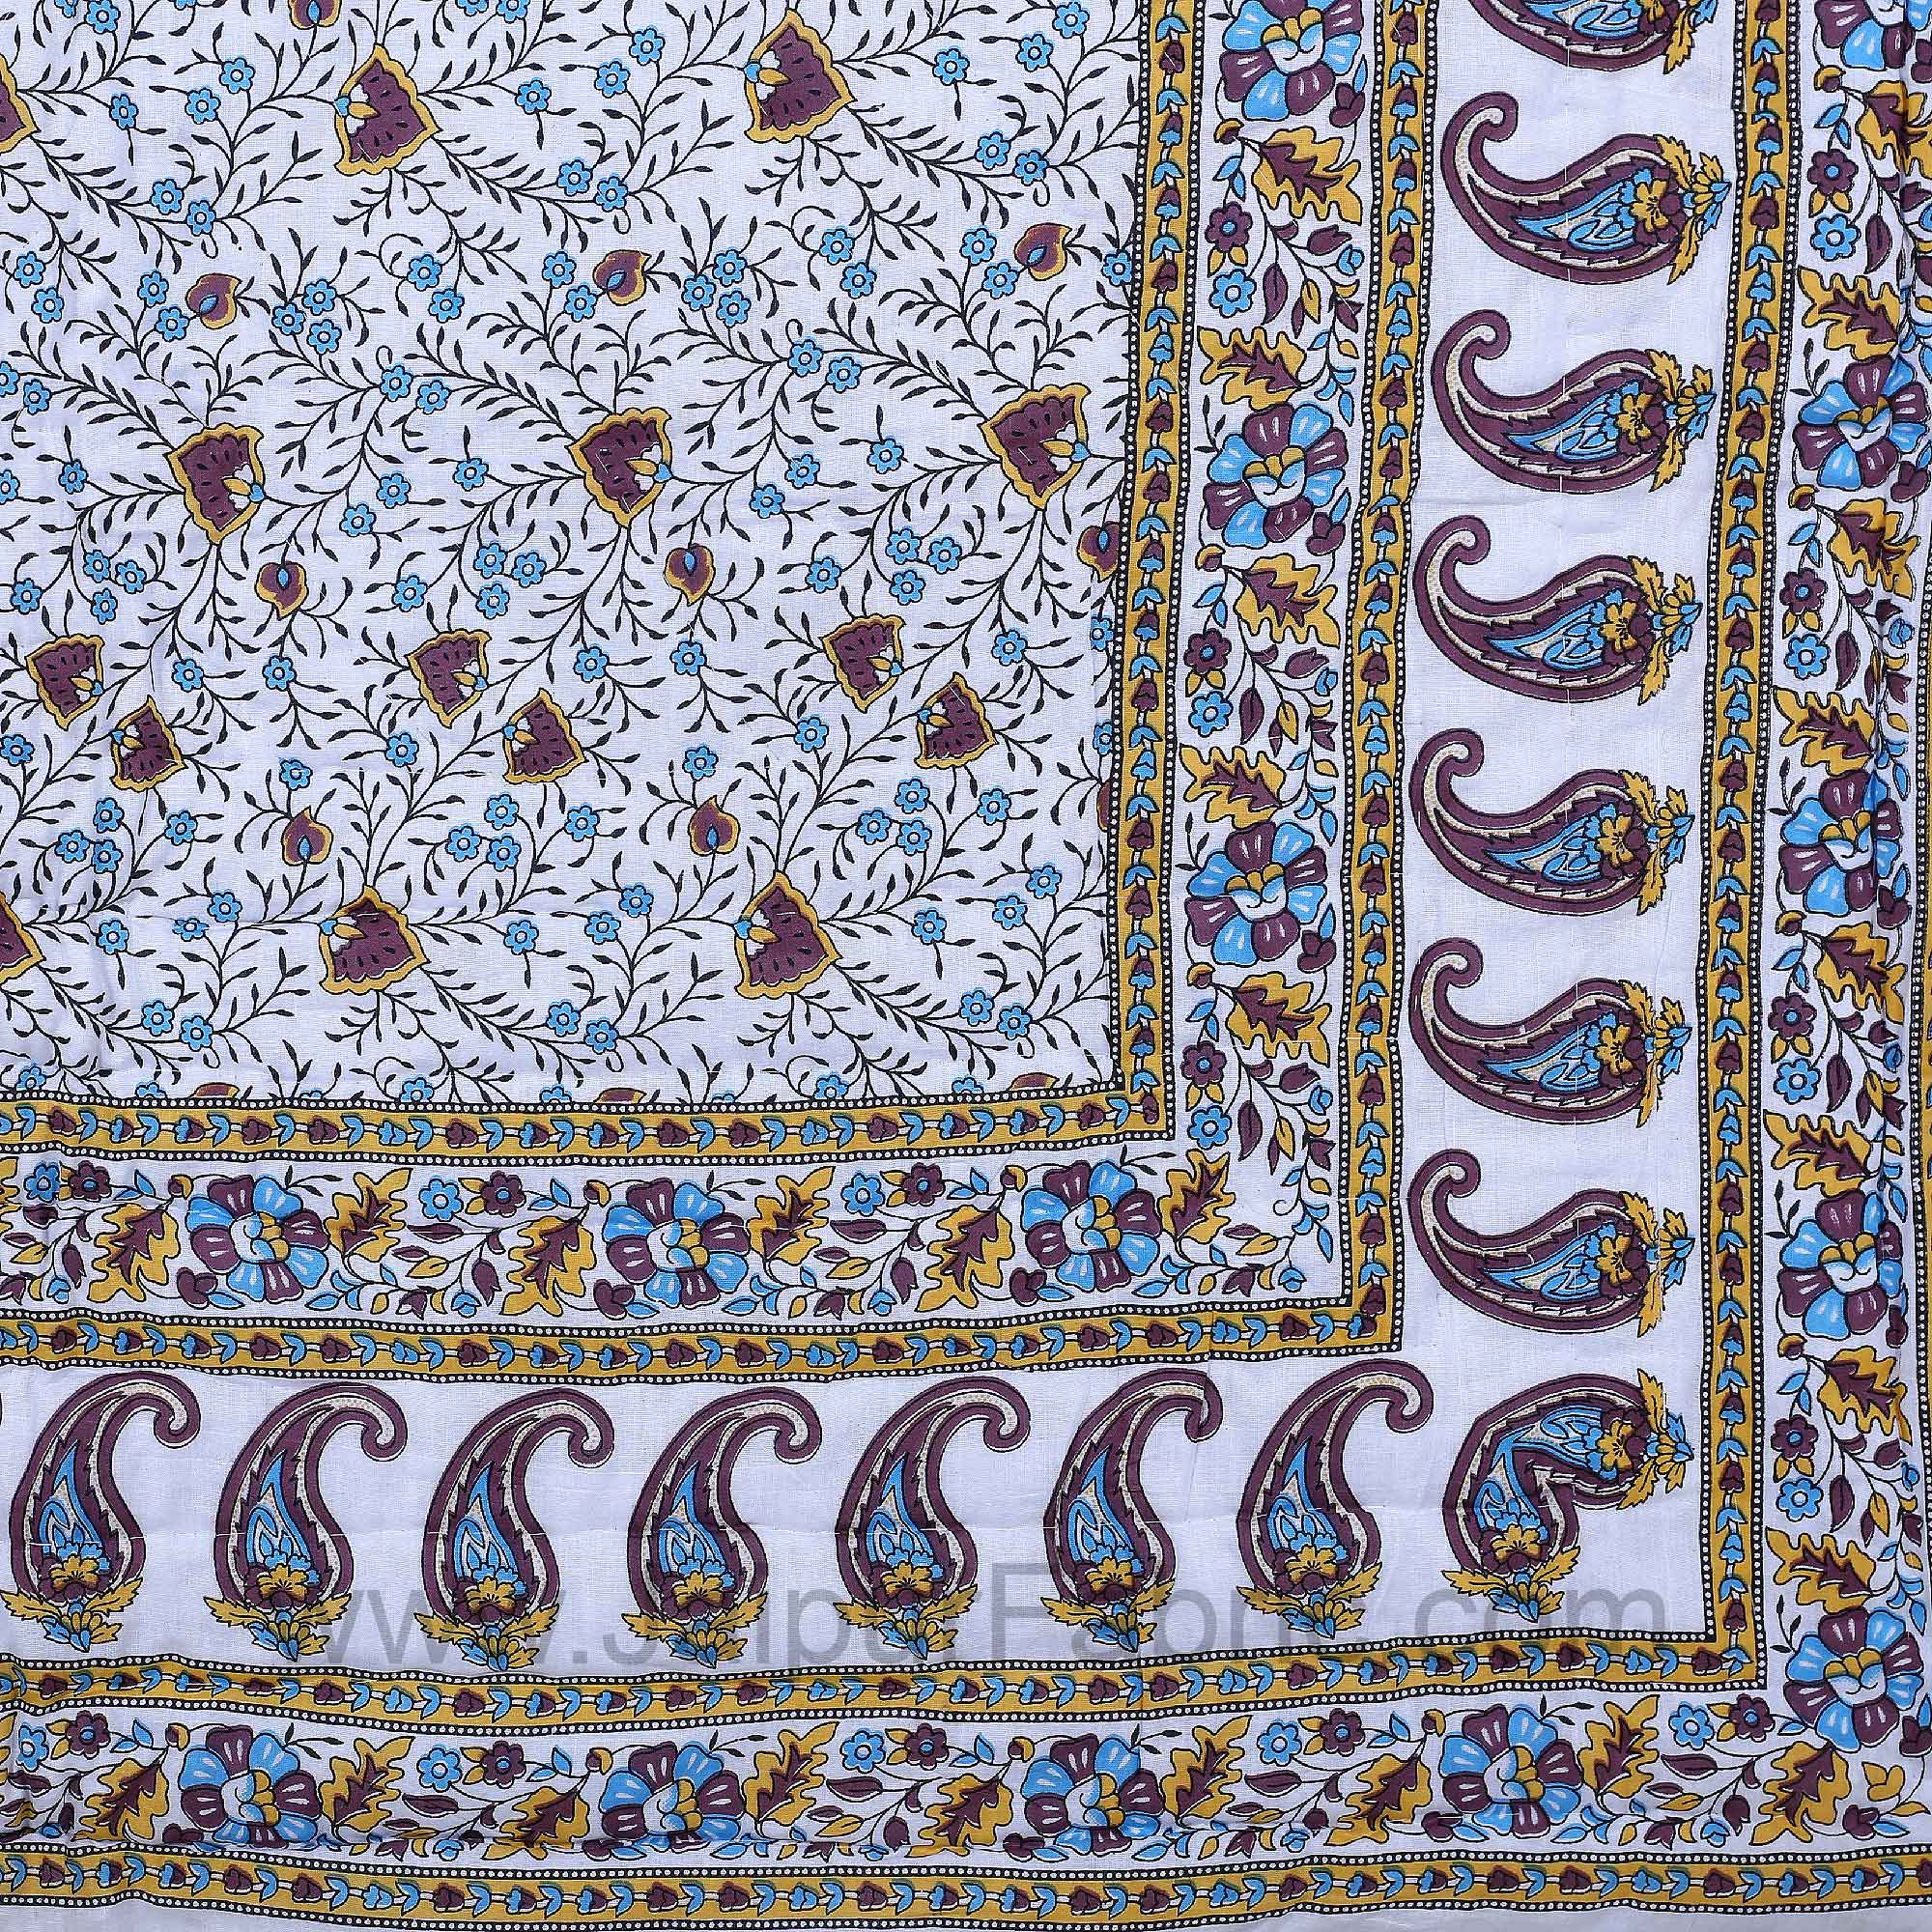 Jaipuri Quilt Floral Print 200Gsm Fine Cotton Single Bed Rajai